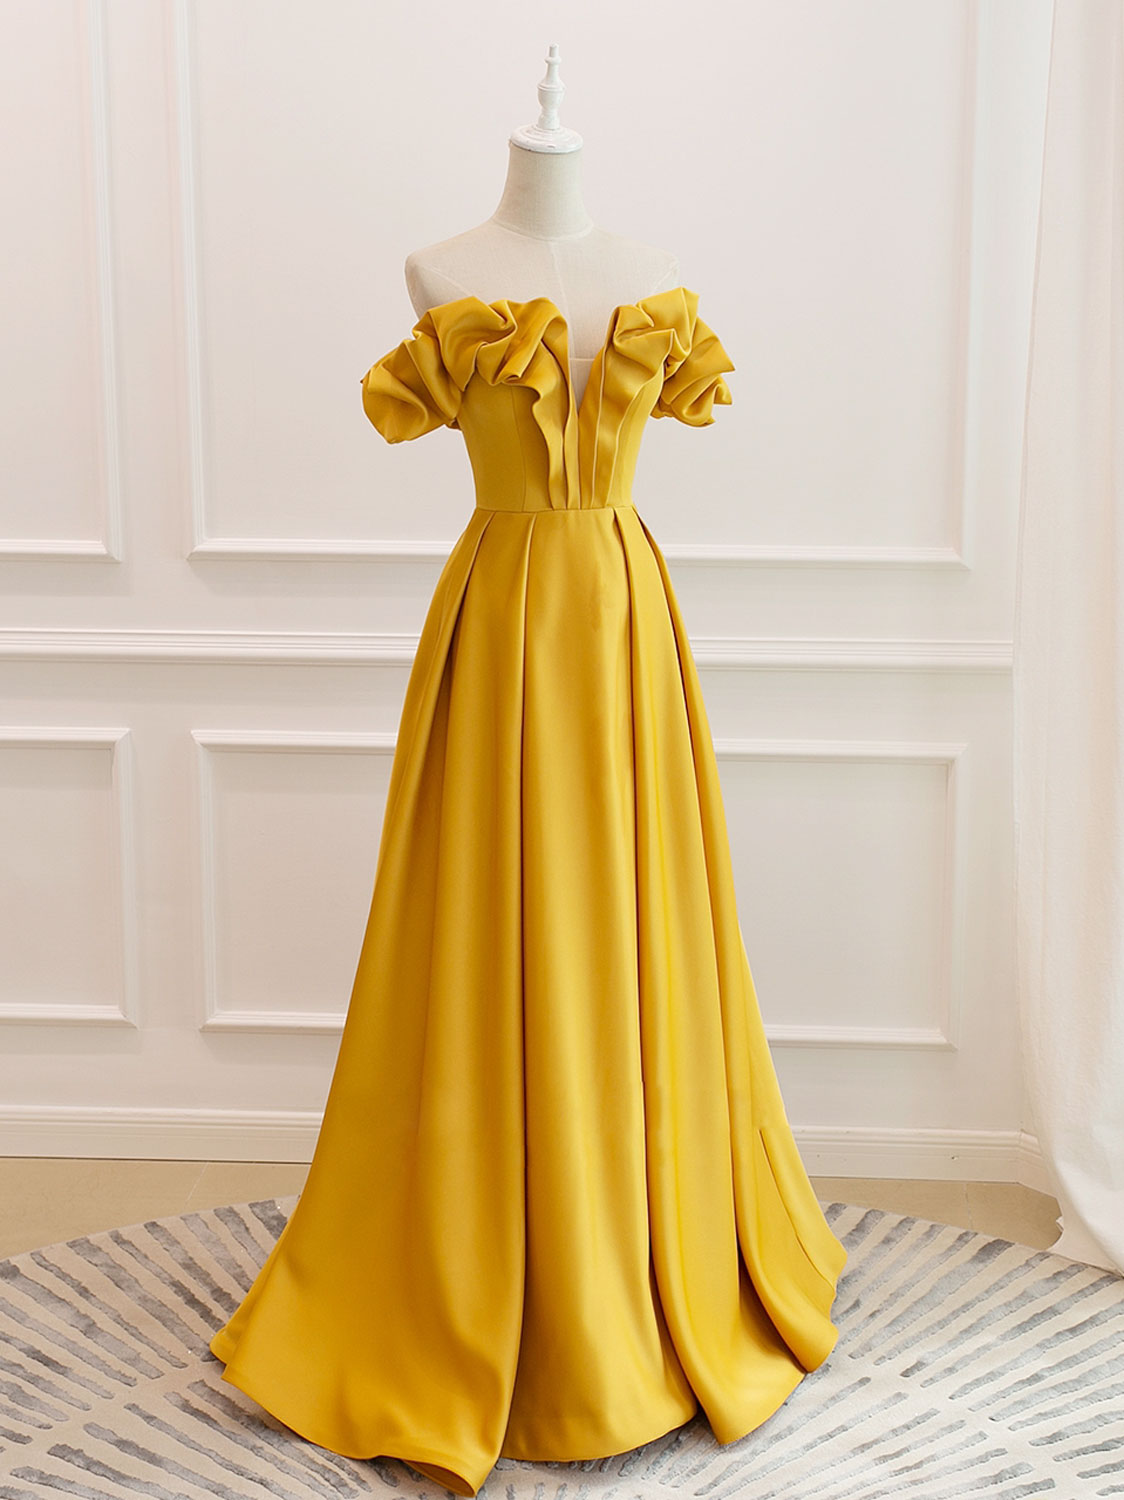 Yellow Bridesmaid Dresses - Marigold, Buttercup and More!